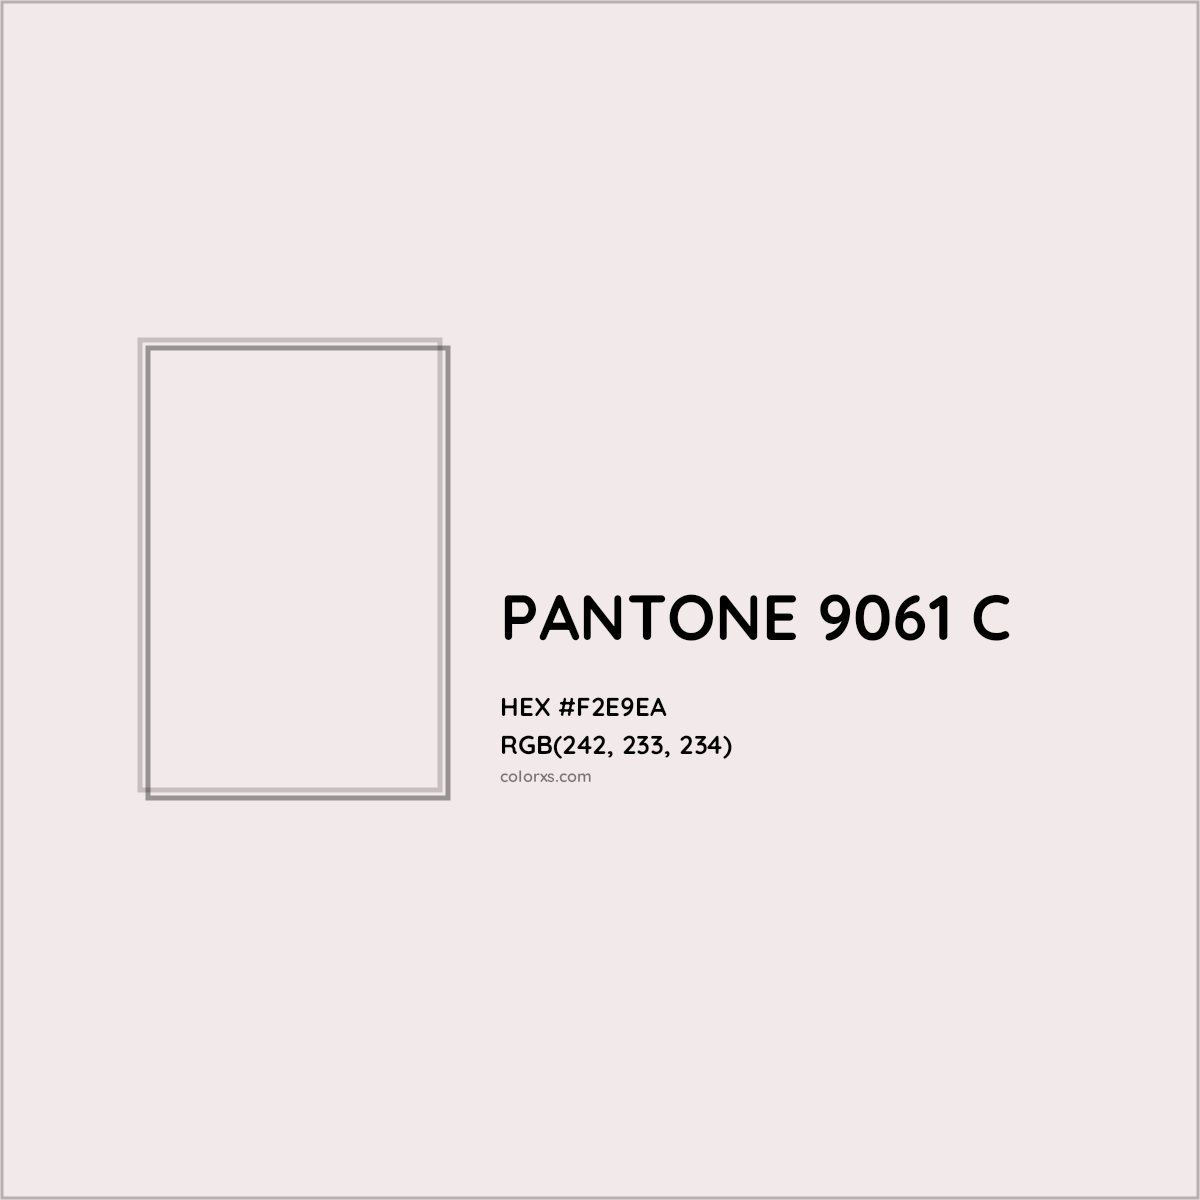 HEX #F2E9EA PANTONE 9061 C CMS Pantone PMS - Color Code